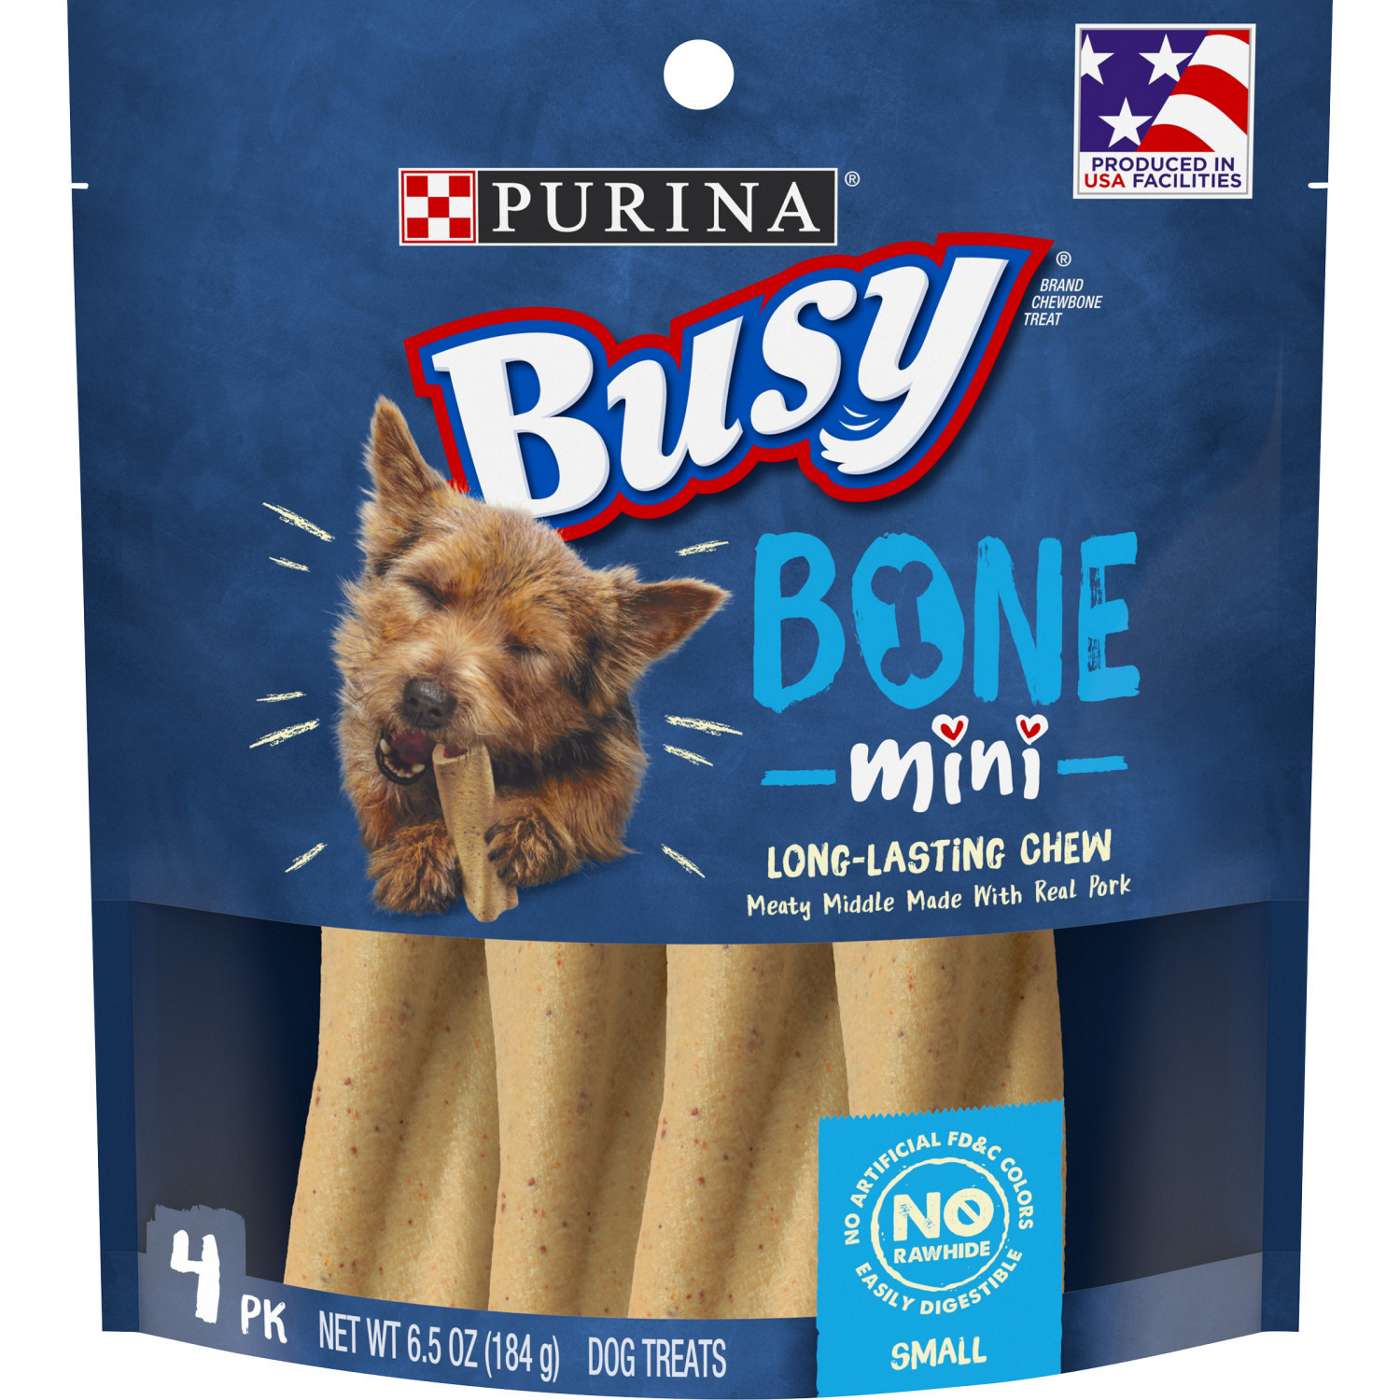 Busy Bone Mini Dog Treats; image 1 of 10